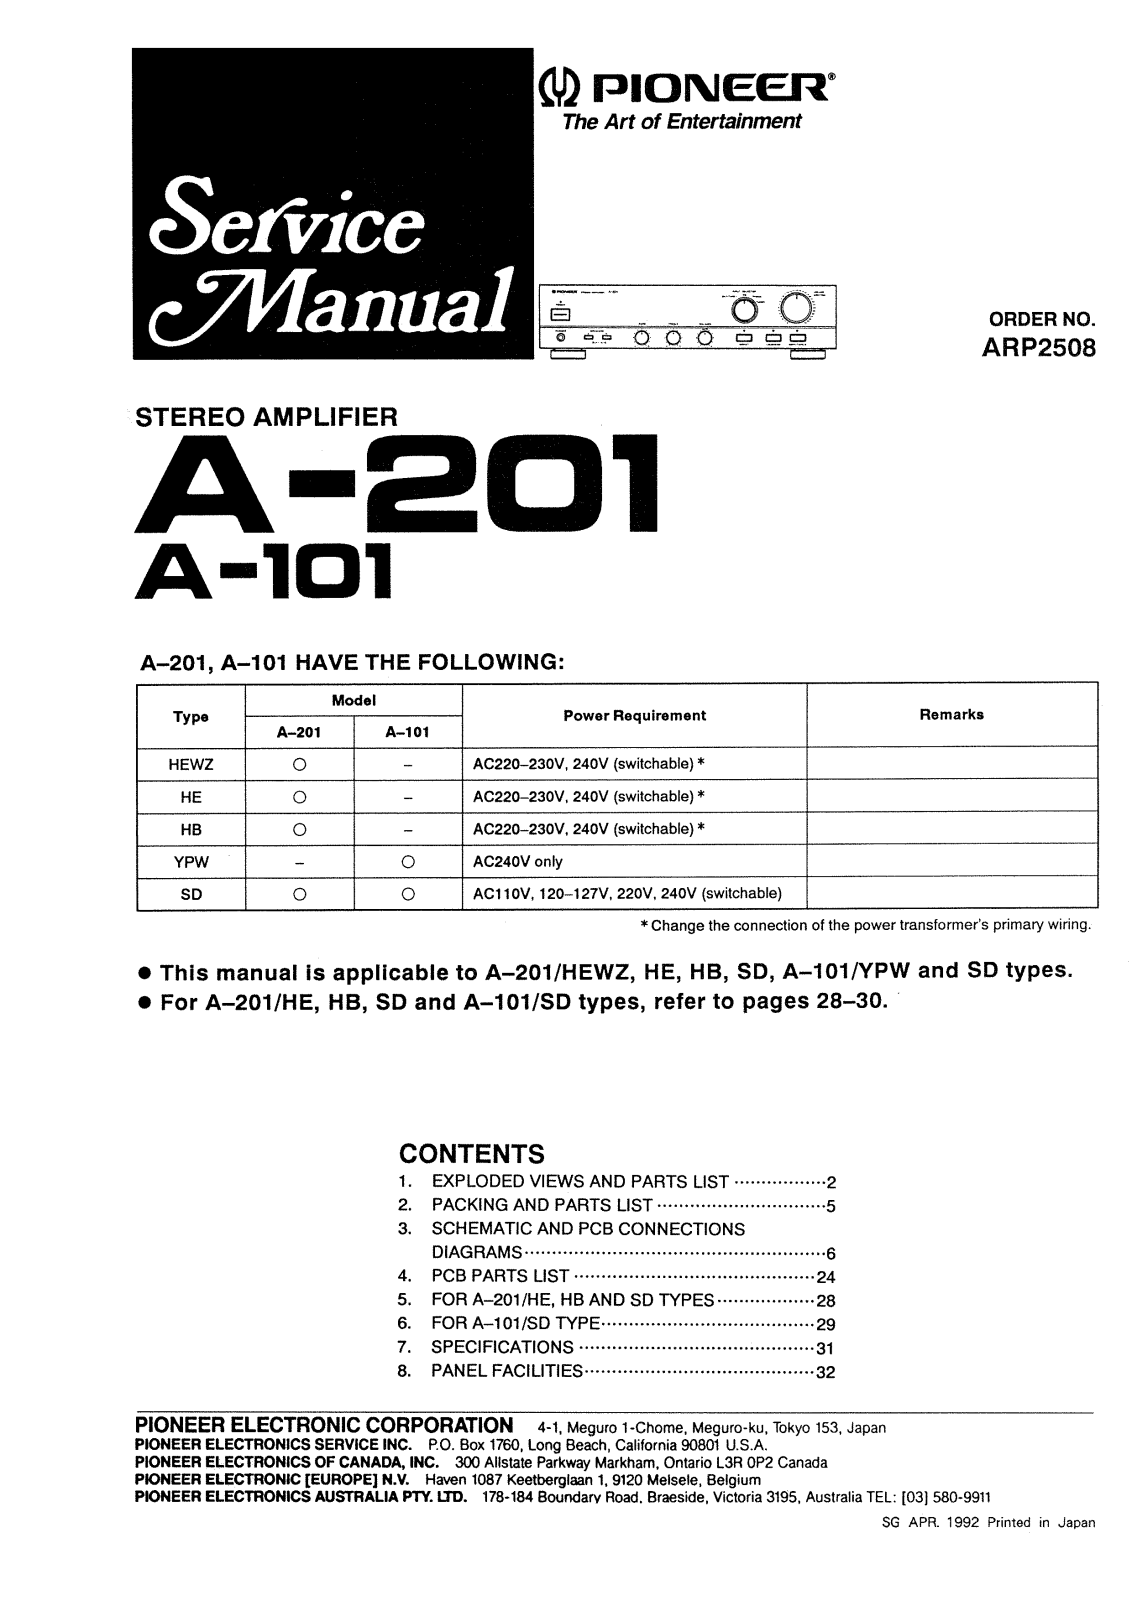 Pioneer A-101, A-201 Service Manual